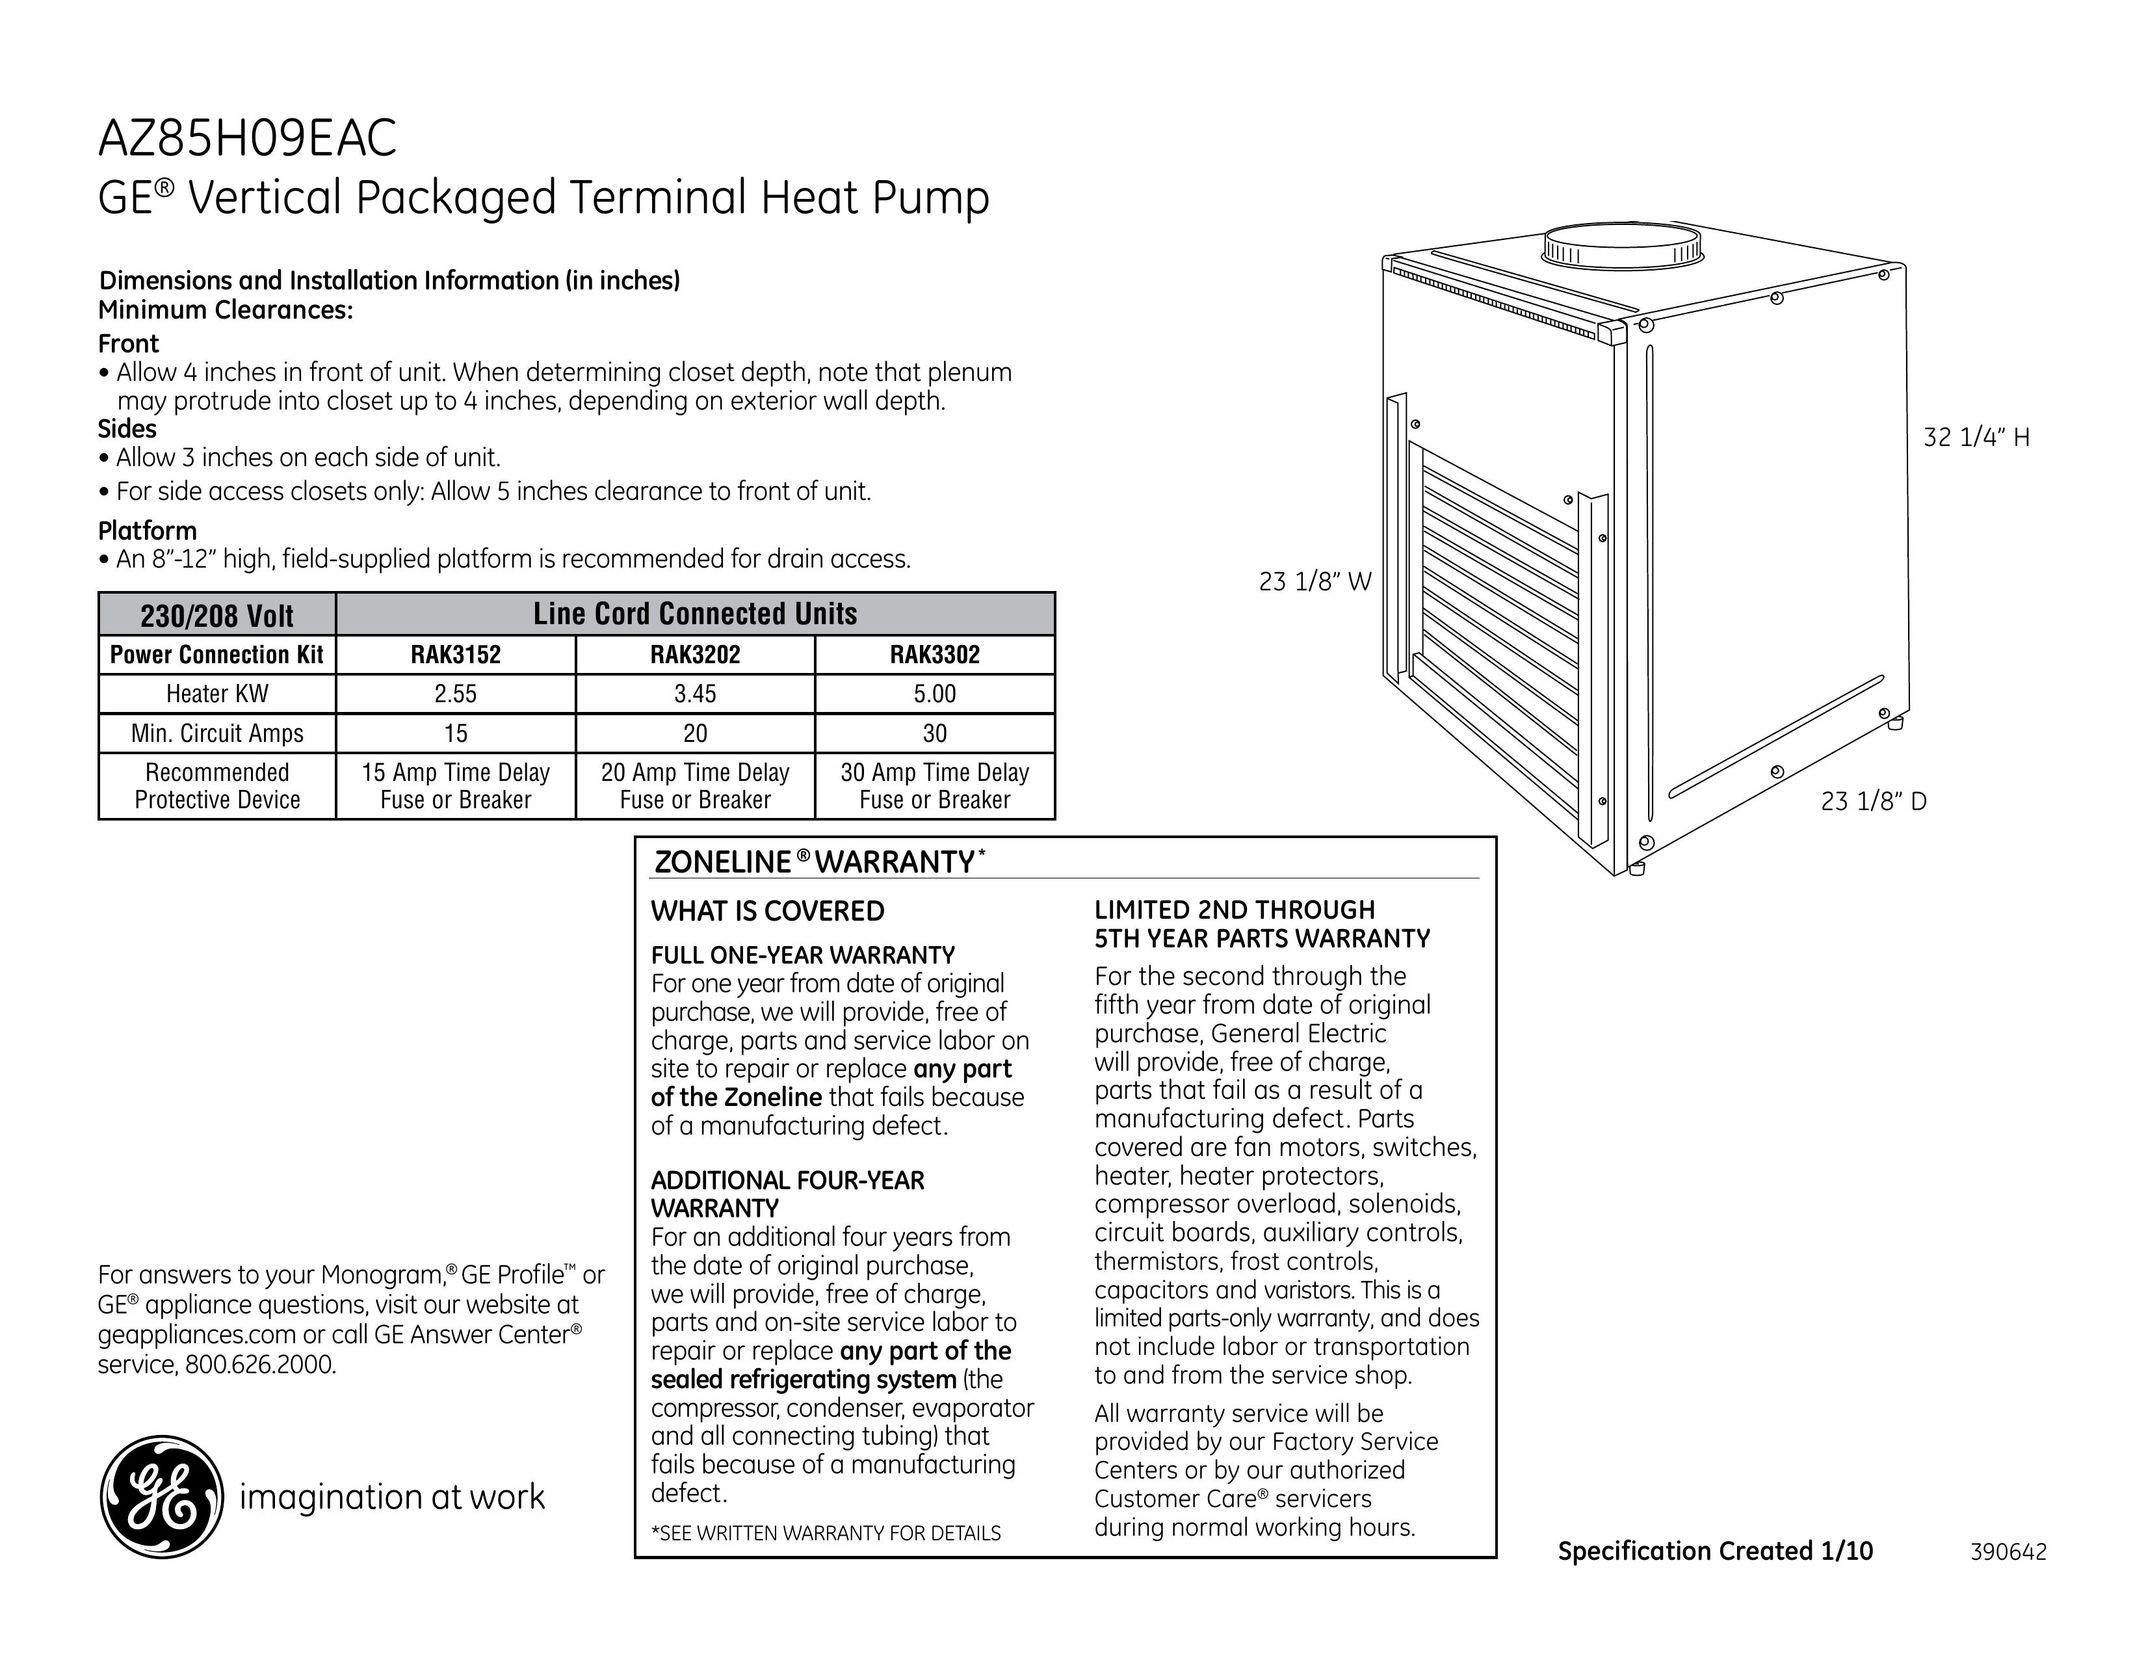 GE AZ85H09EAC Heat Pump User Manual